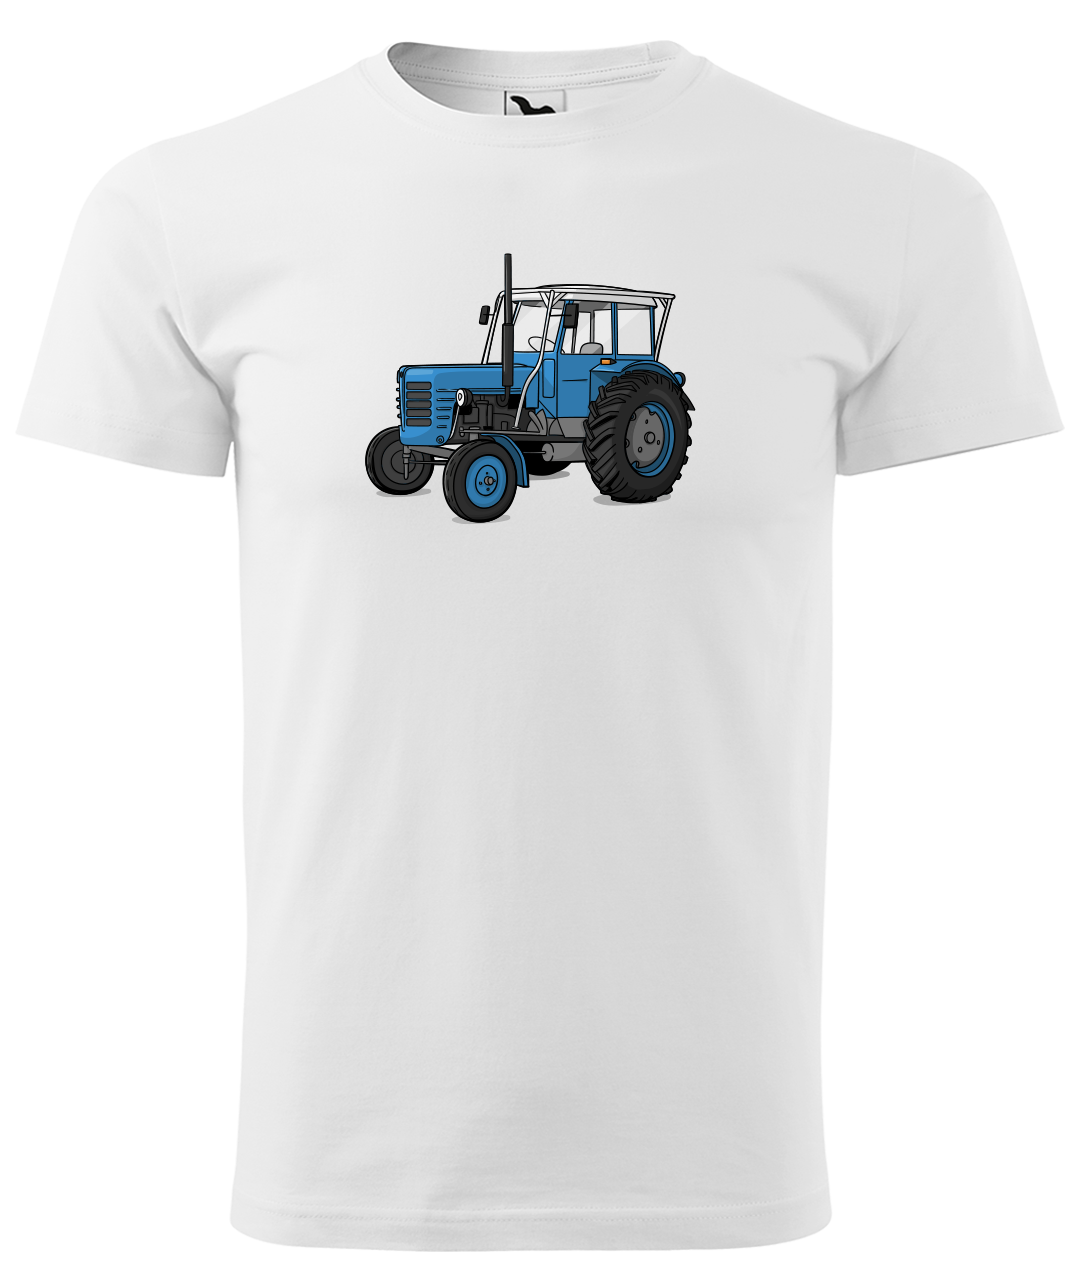 Dětské tričko s traktorem - Starý traktor Velikost: 8 let / 134 cm, Barva: Bílá (00)